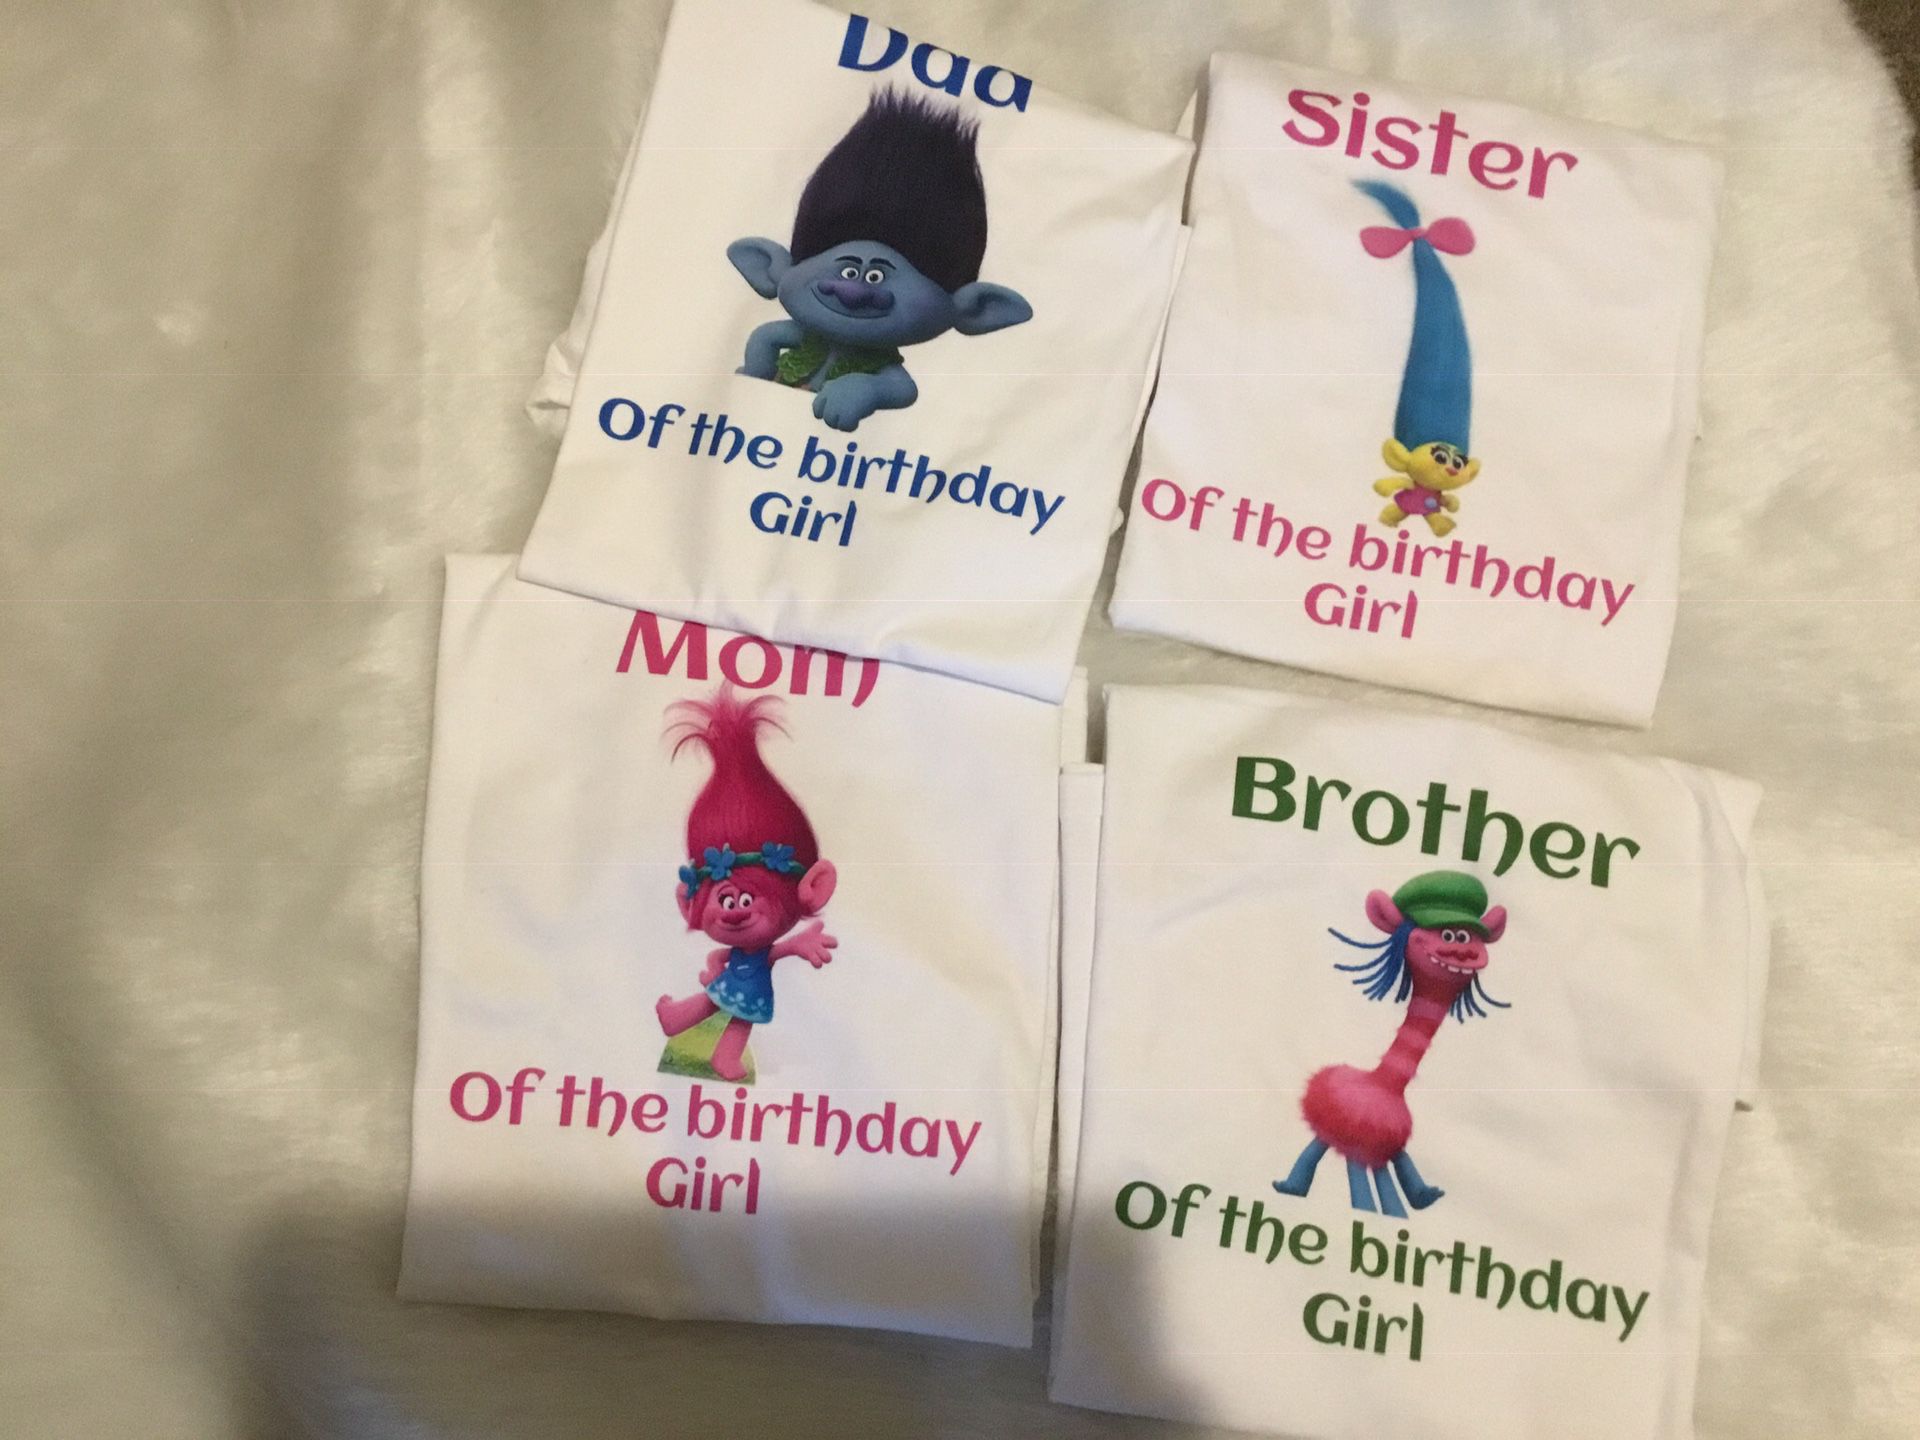 Trolls family shirts